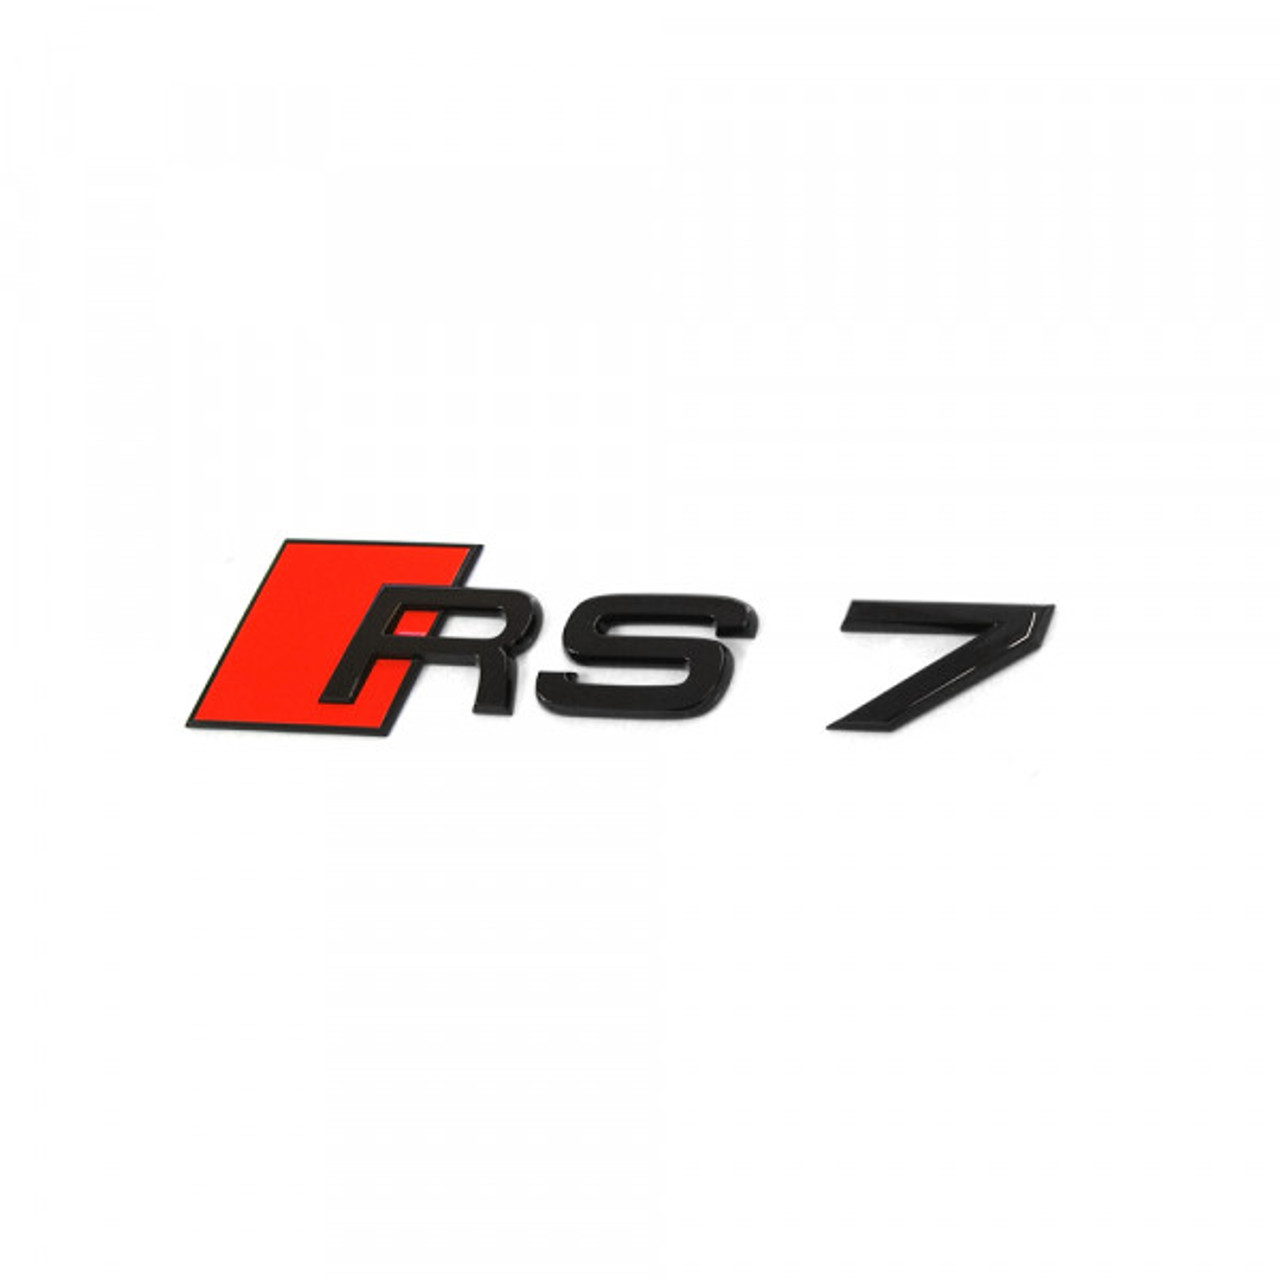 Audi RS7 gloss black rear badge/emblem